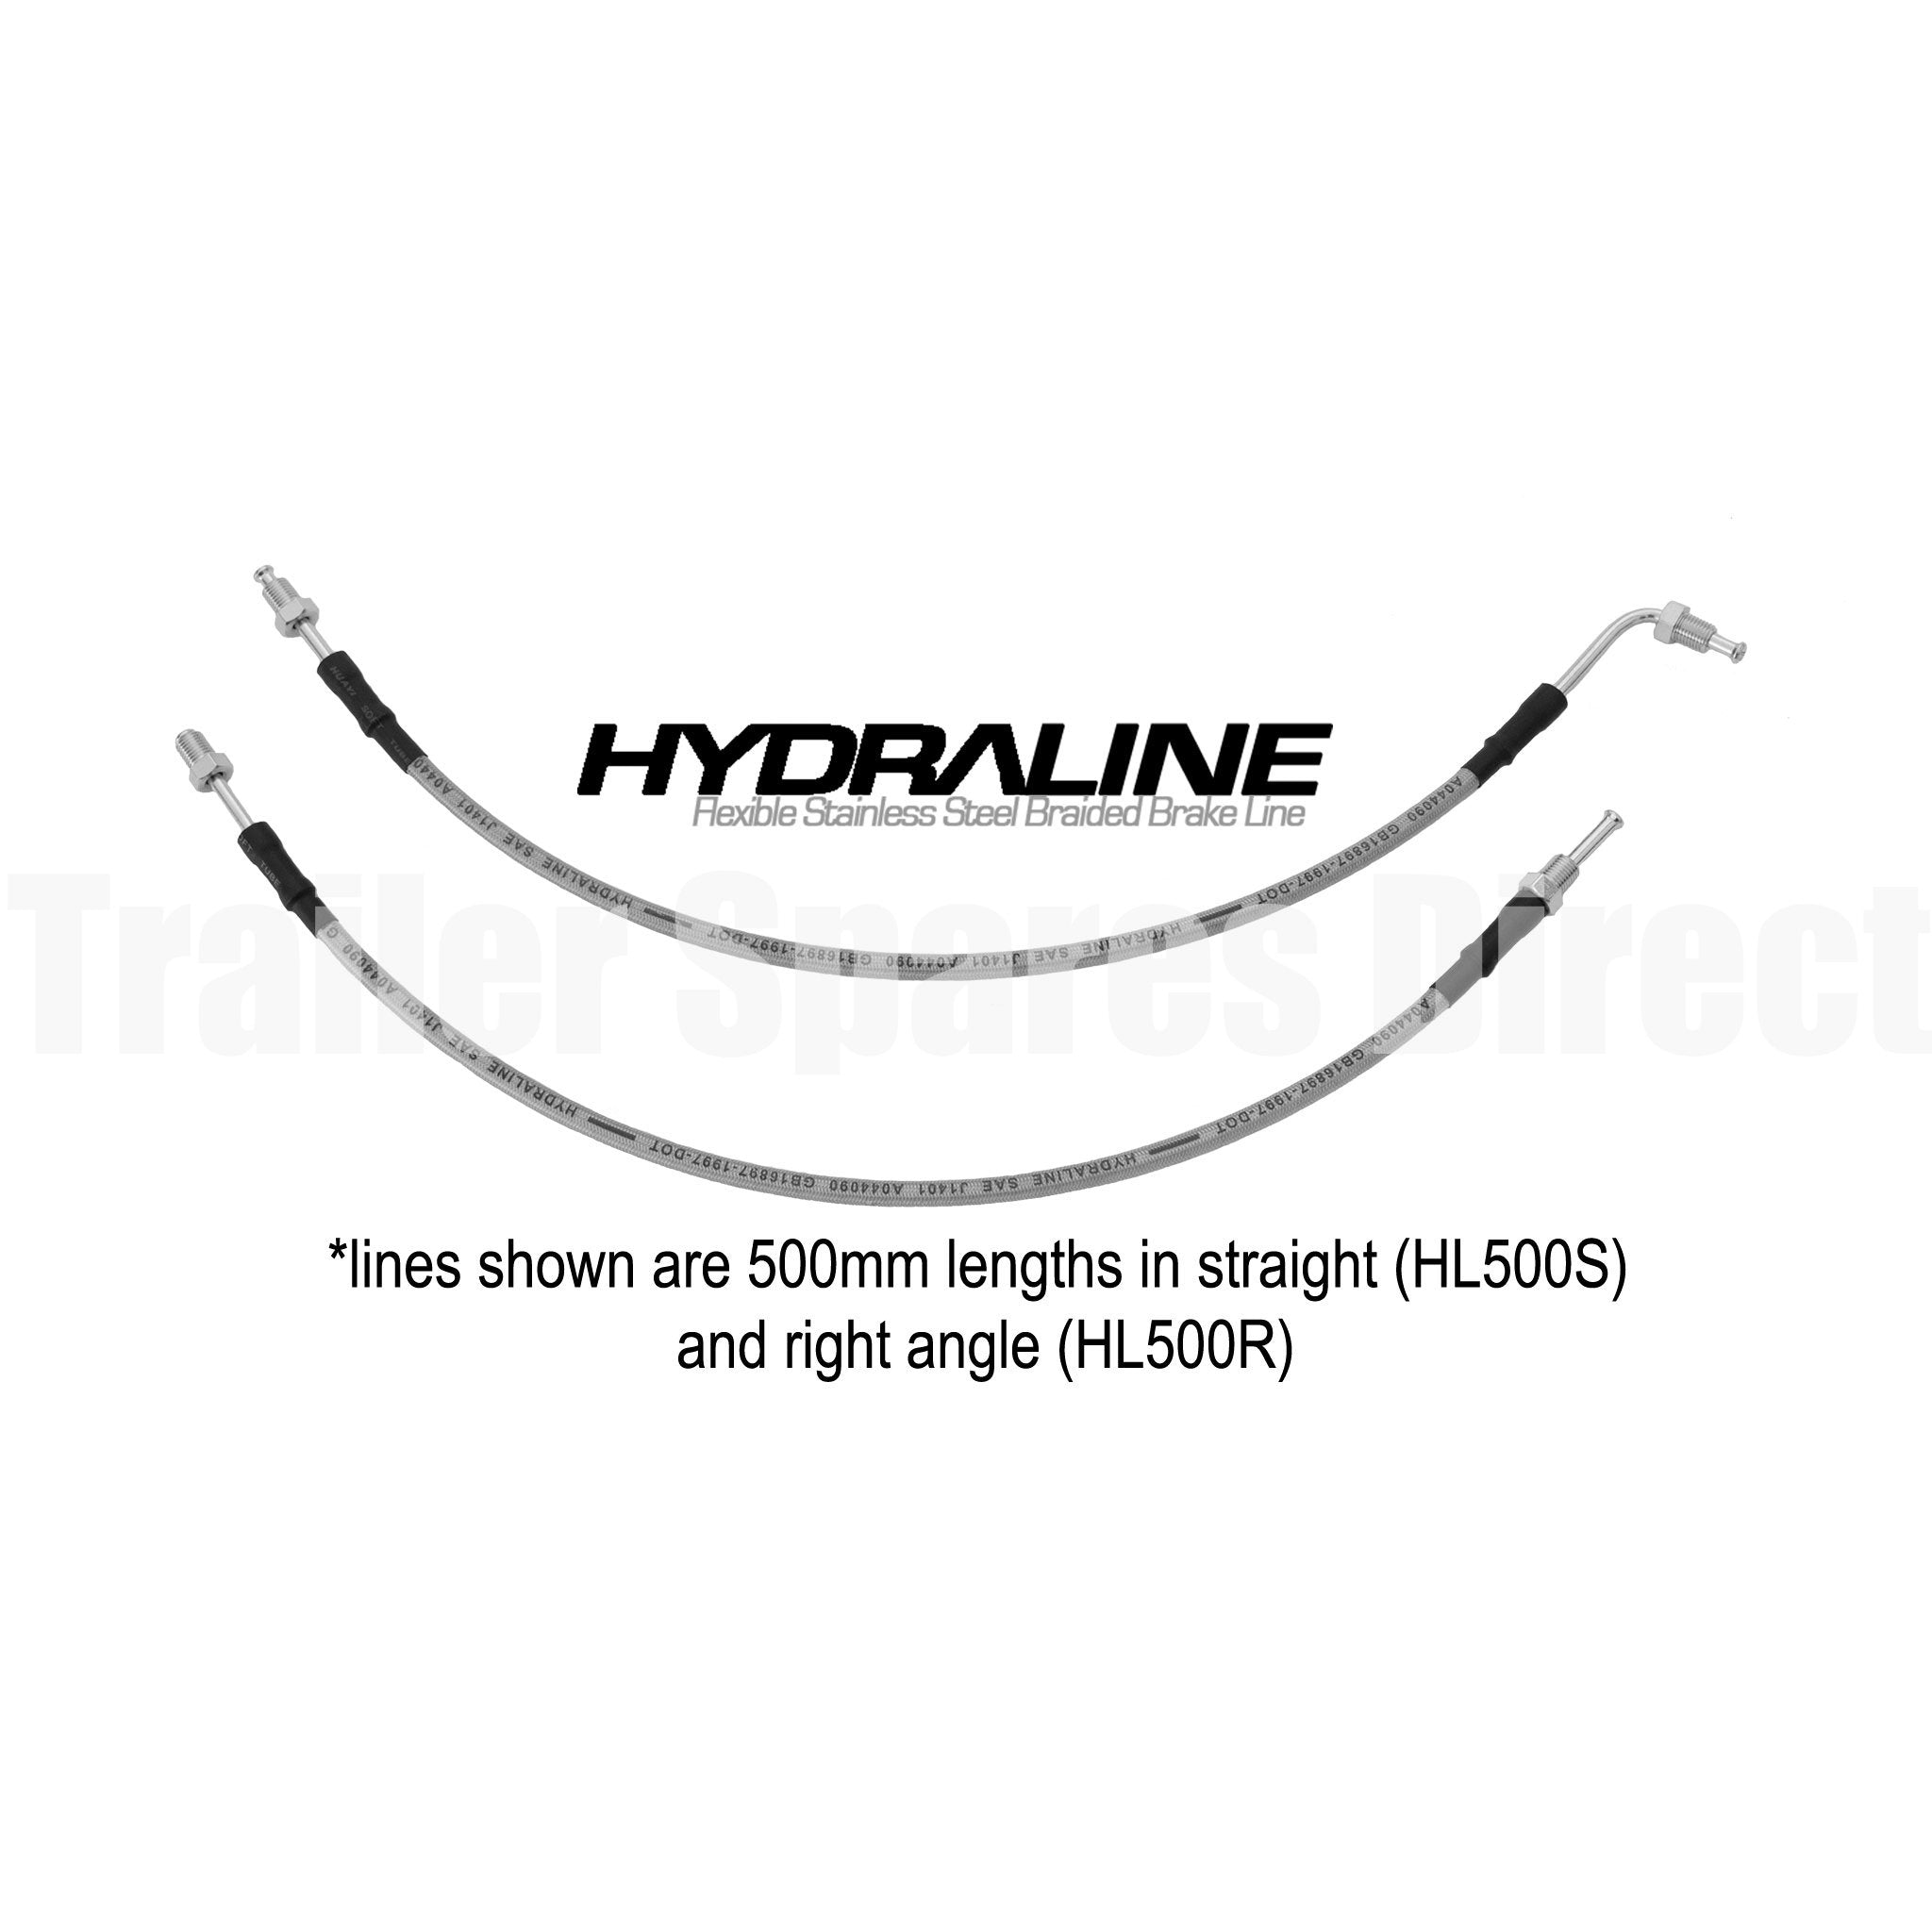 5500mm HydraLine brake hose